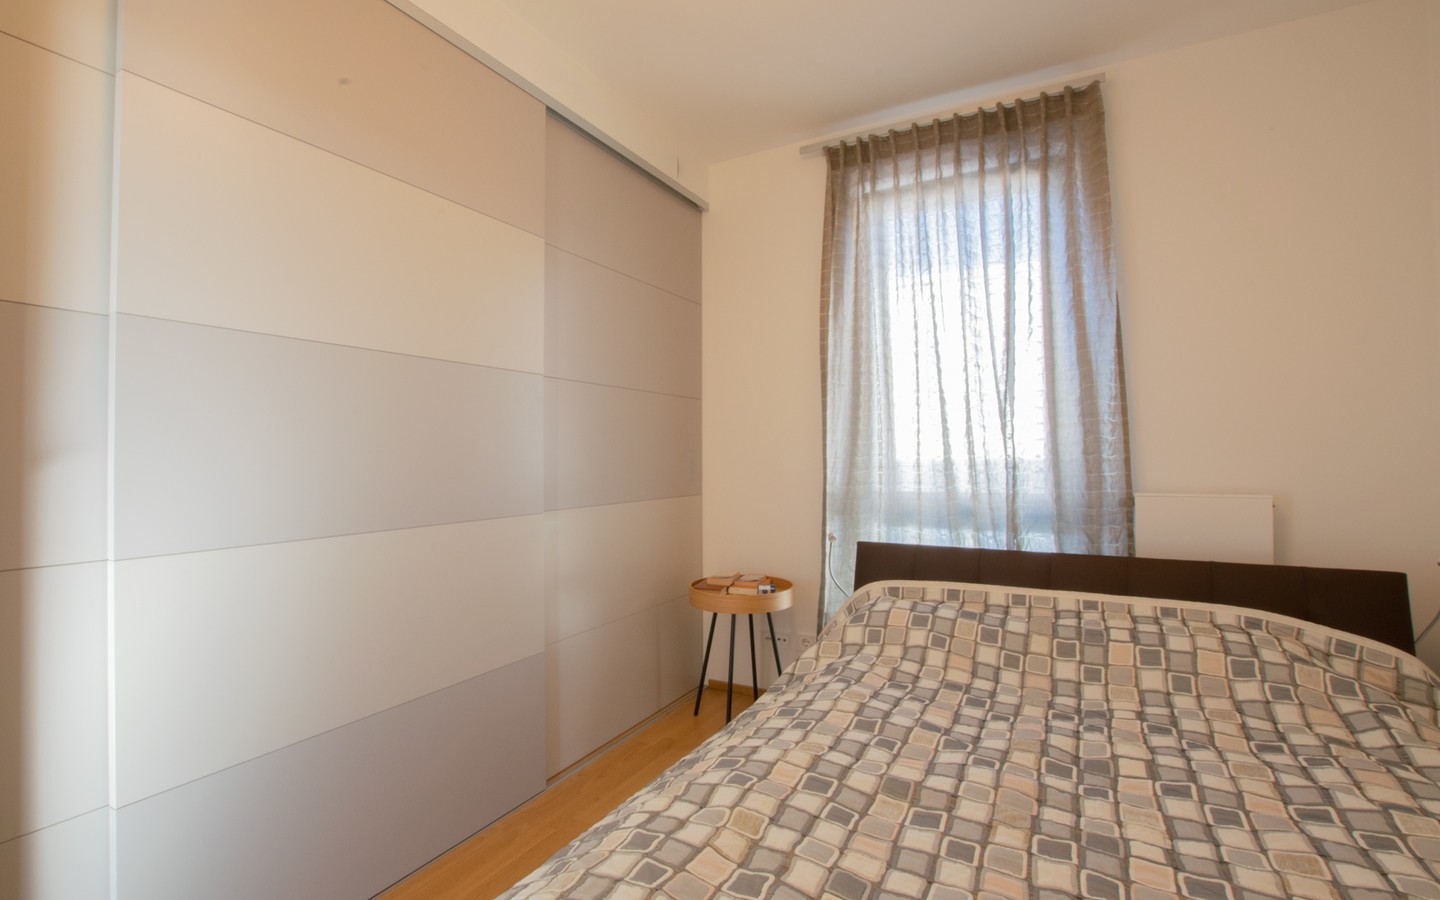 Schlafzimmer - Mit phänomenalem Panorama-Blick: Attraktive Penthouse-Wohnung an der Bahnstadt-Promenade